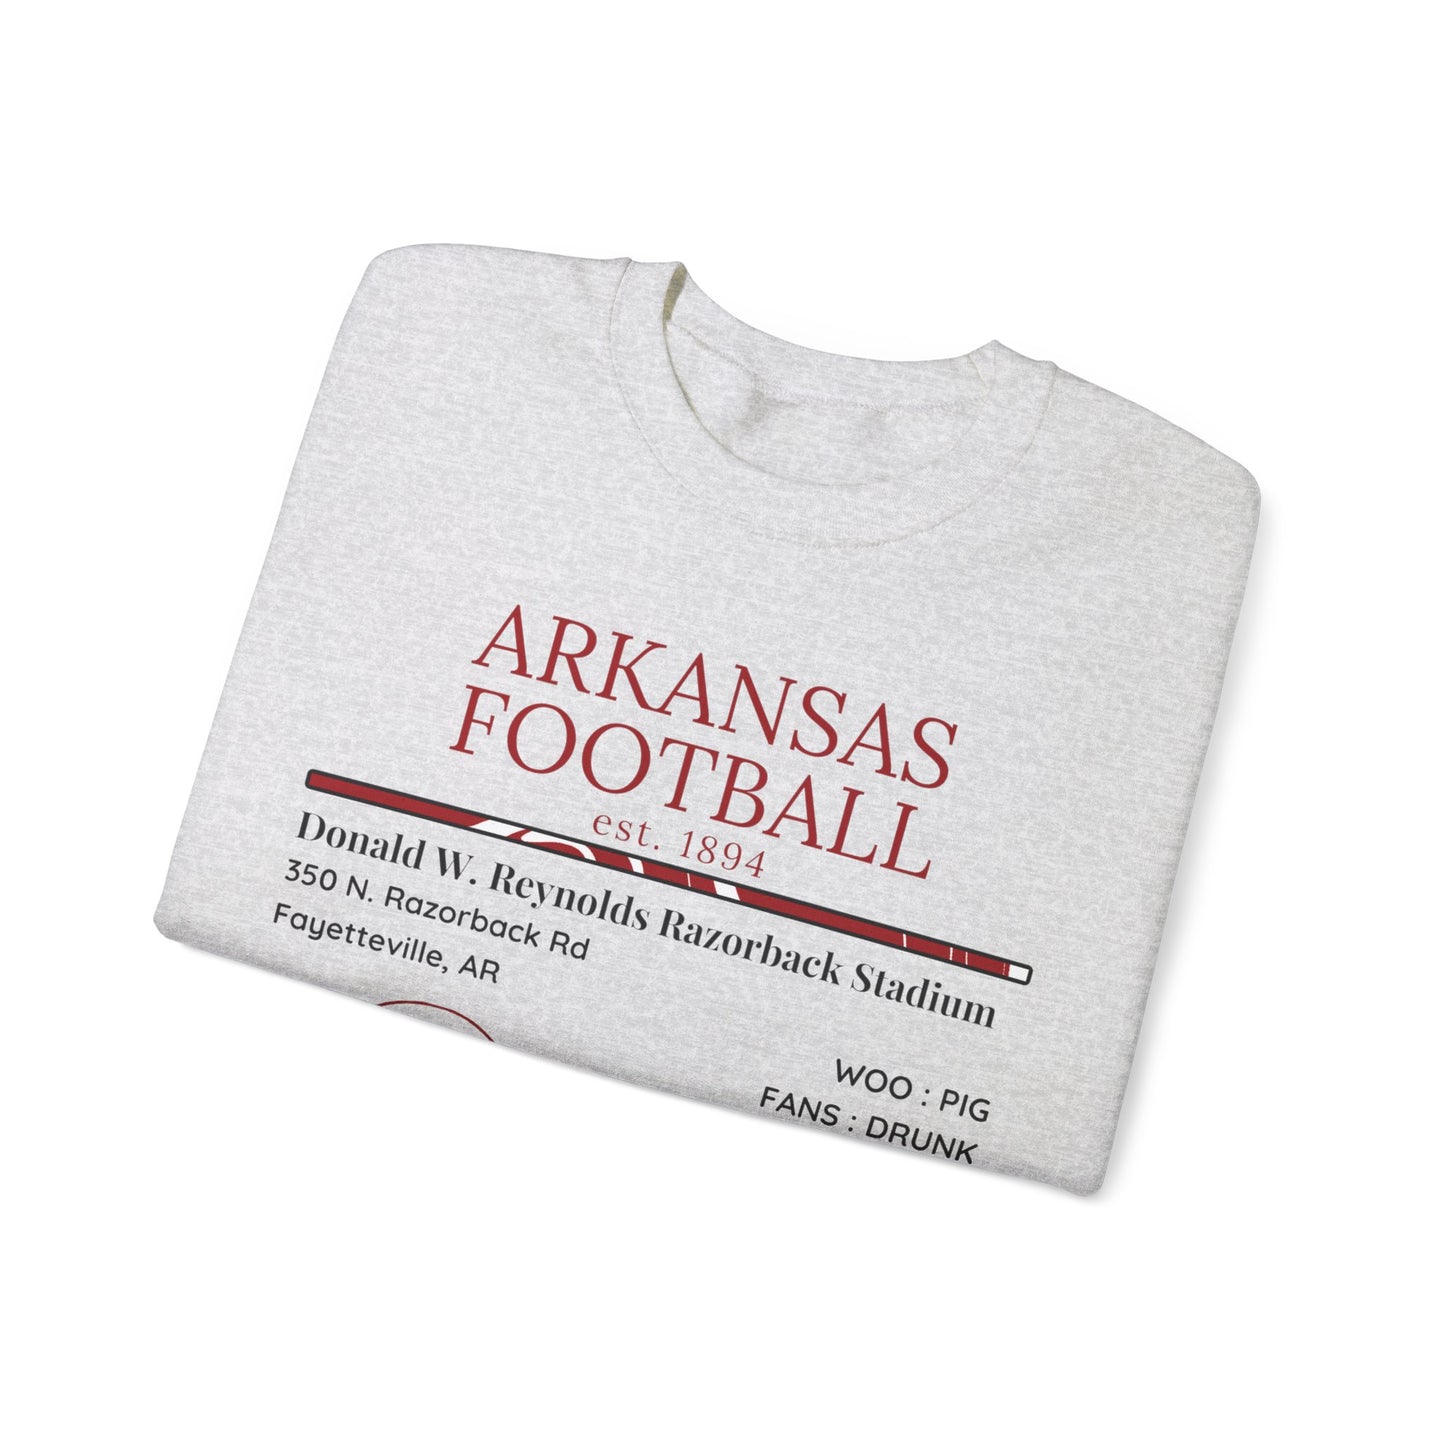 Arkansas Football Sweatshirt